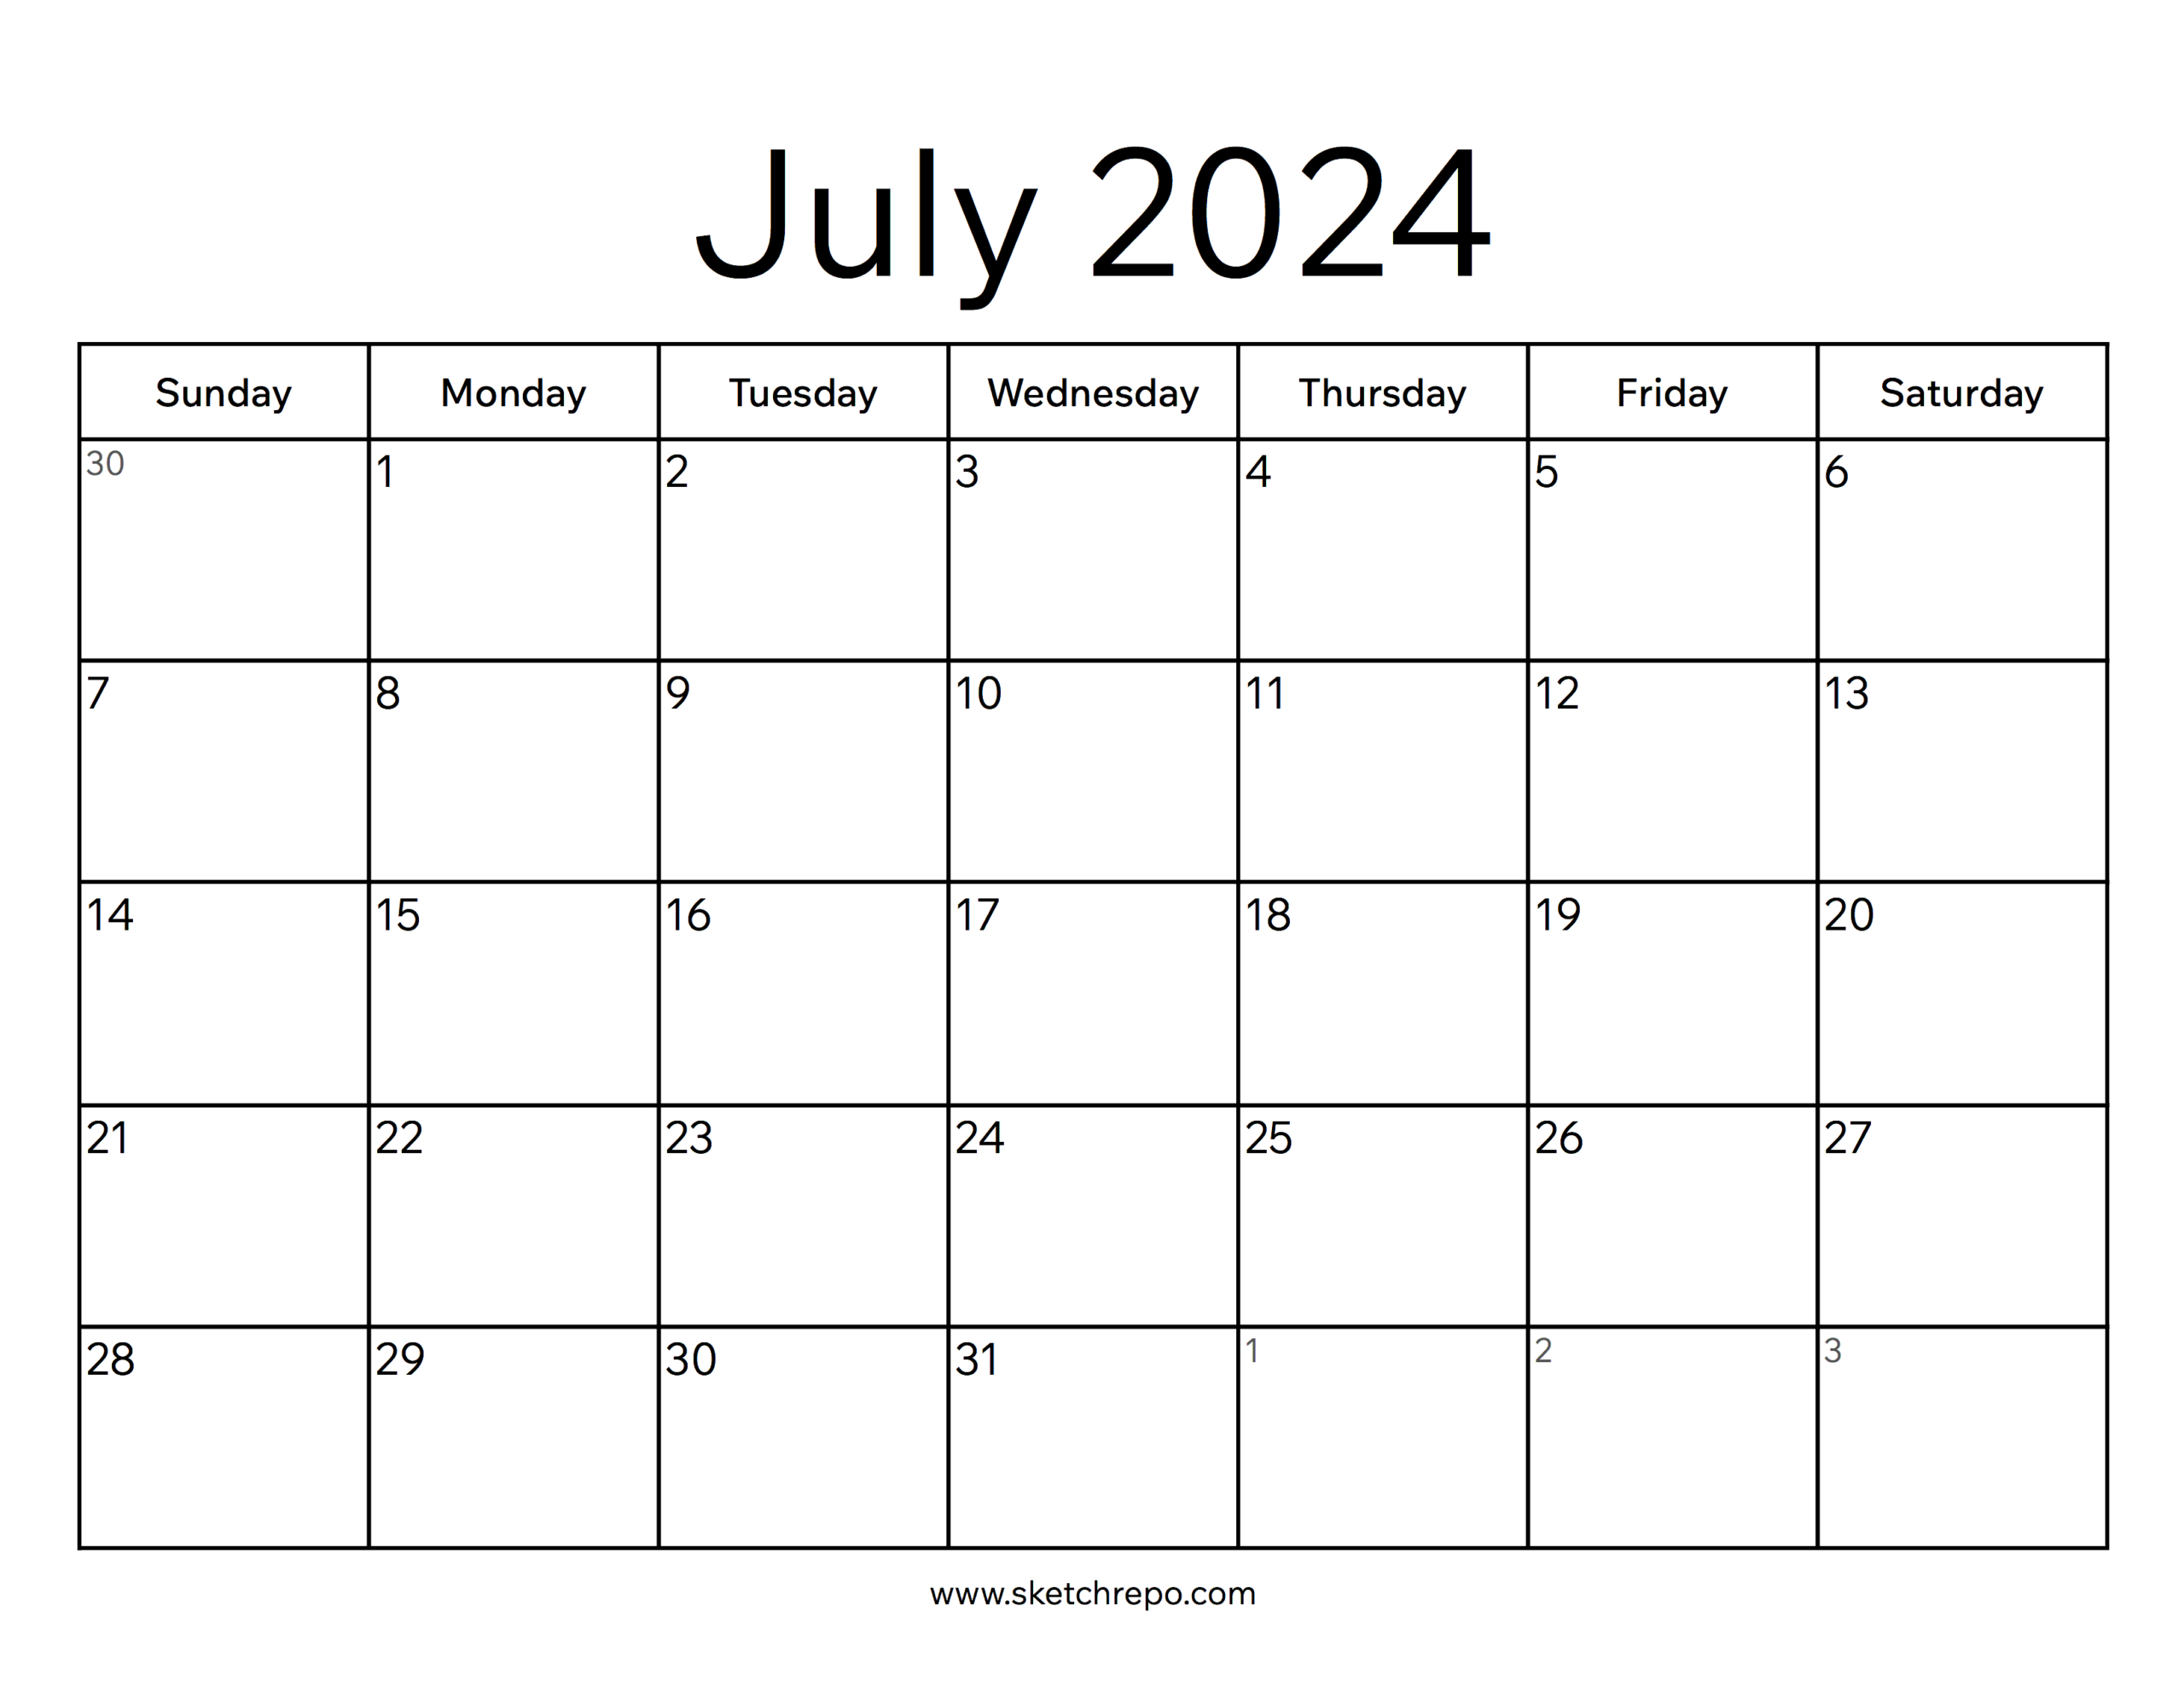 July 2024 Calendar – Sketch Repo inside The Calendar of July 2024